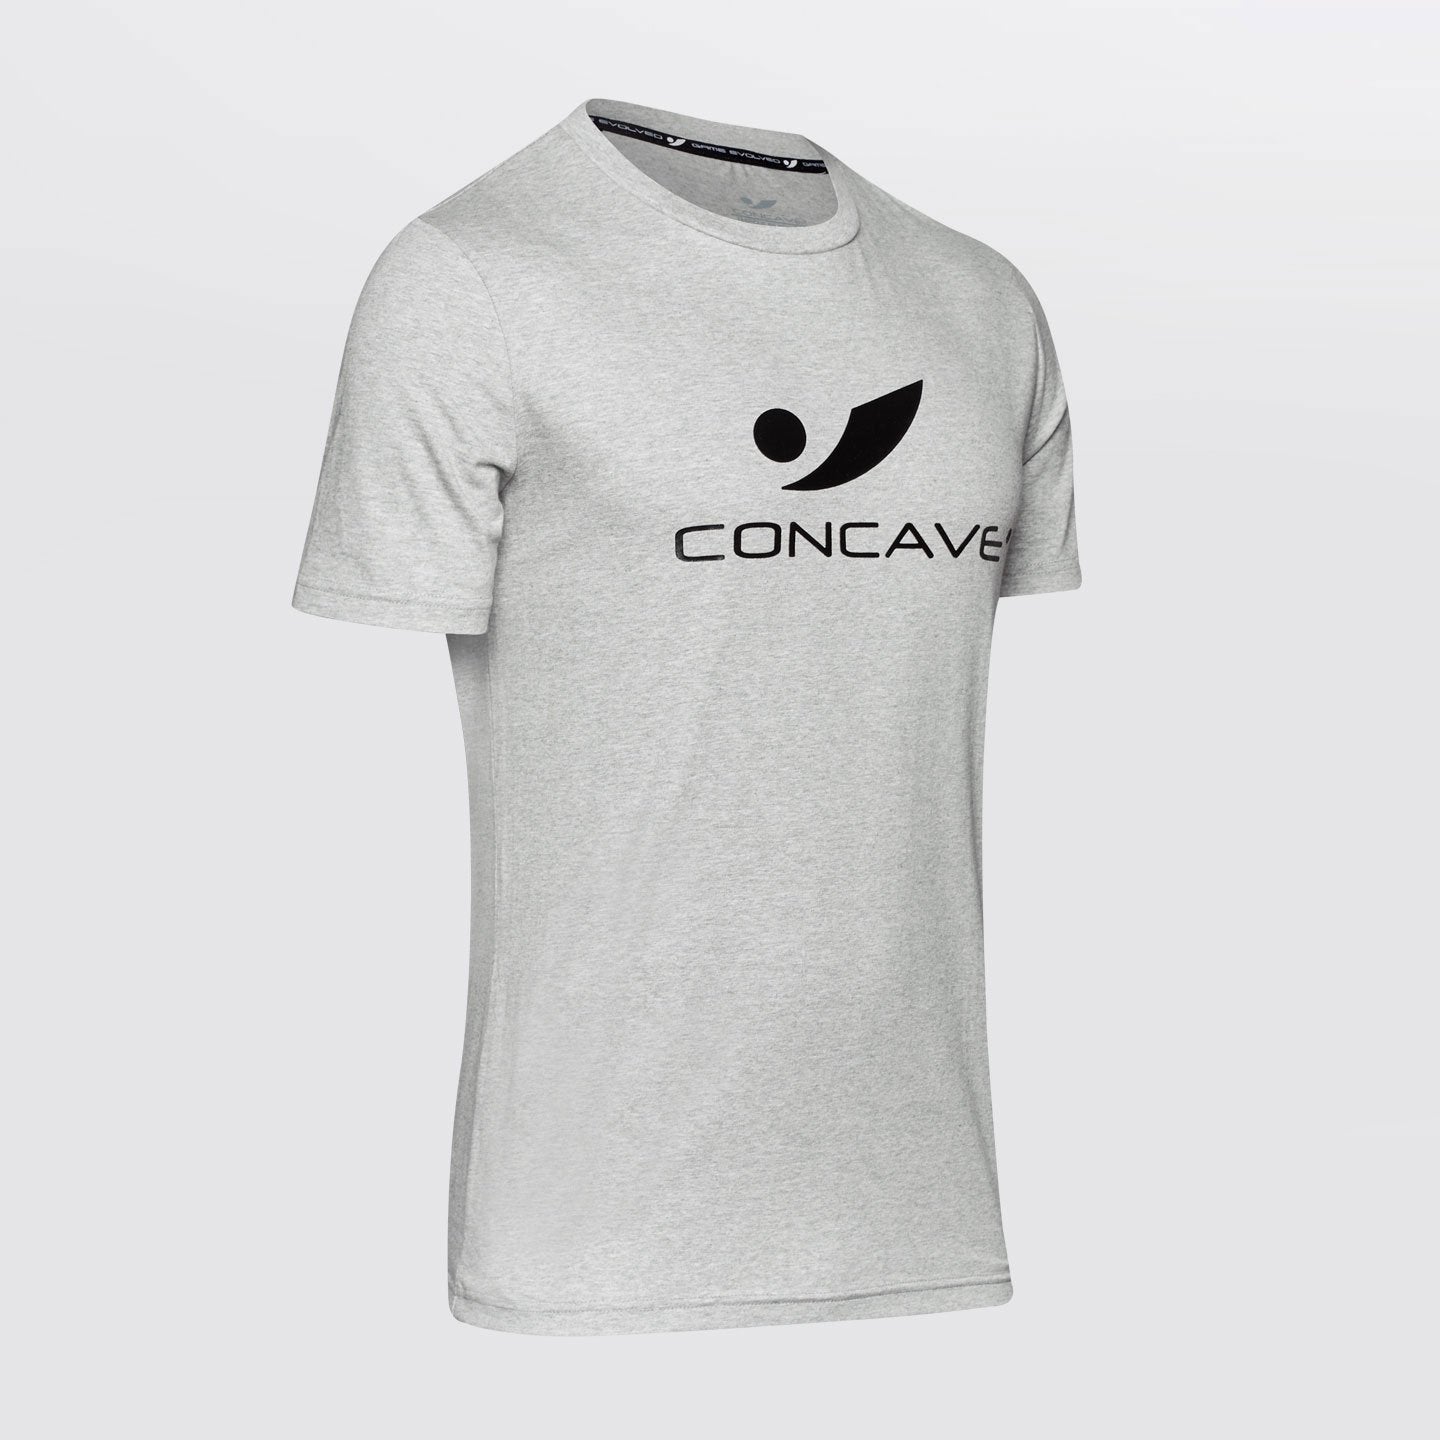 Concave T-Shirt - Grey/Black